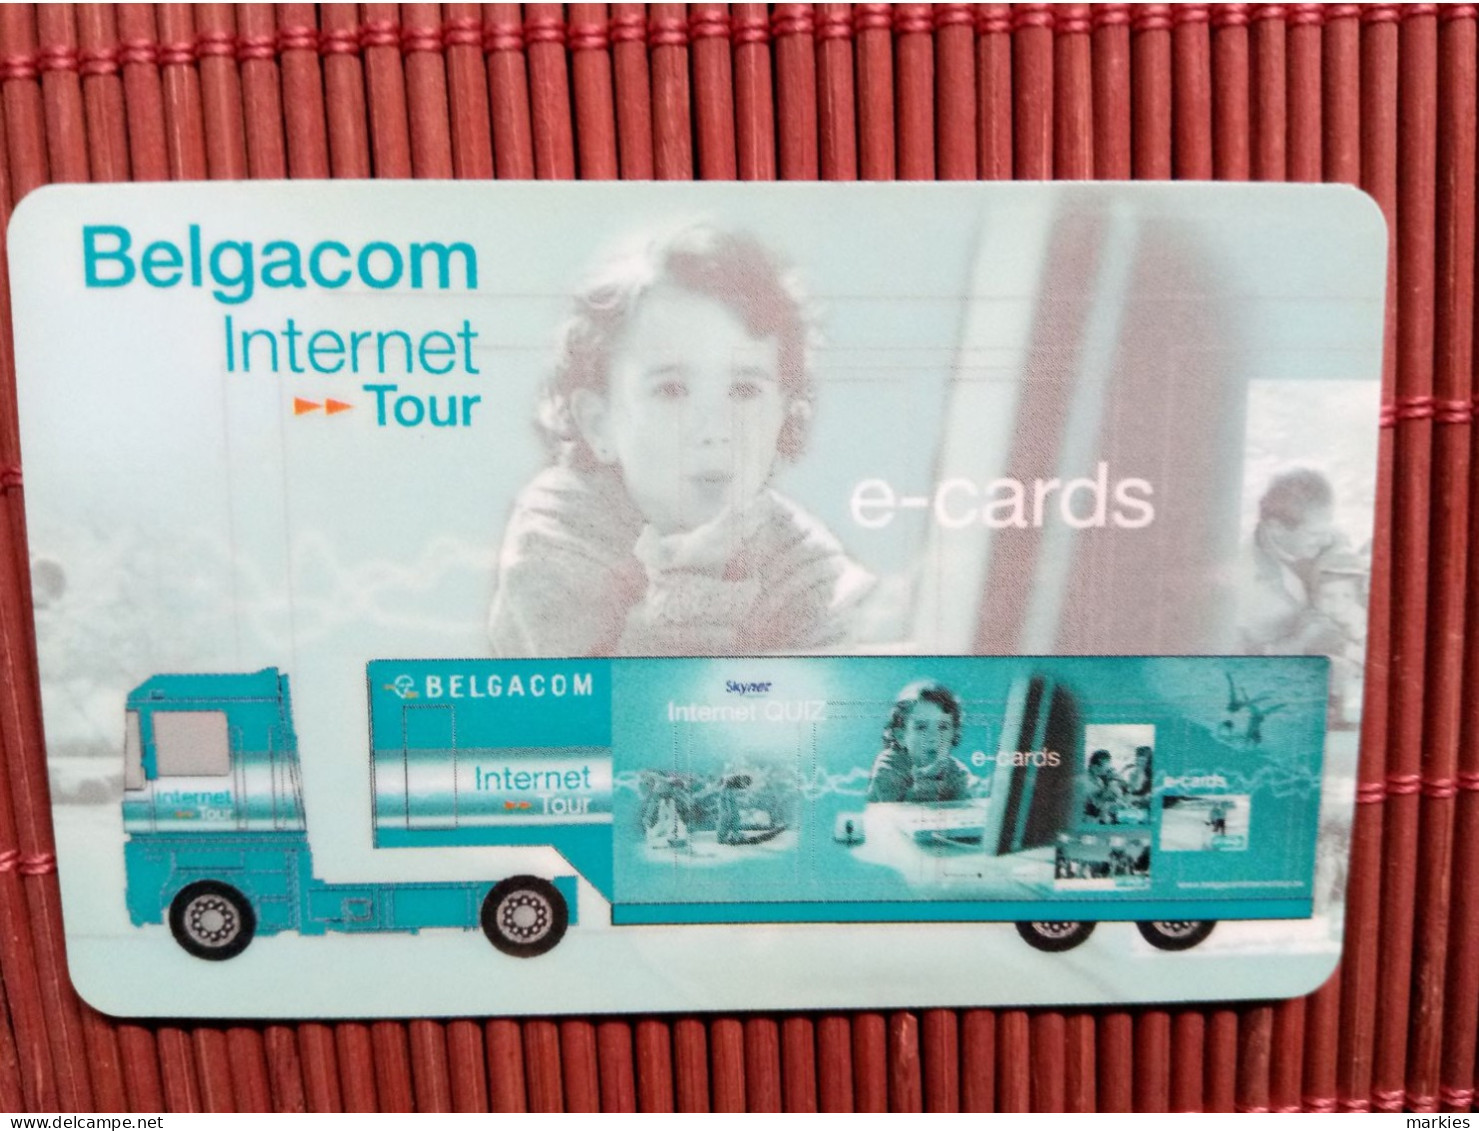 Sratch & Surf Belgacom Prepaidcard Used 2 Photos Rare - [2] Prepaid & Refill Cards